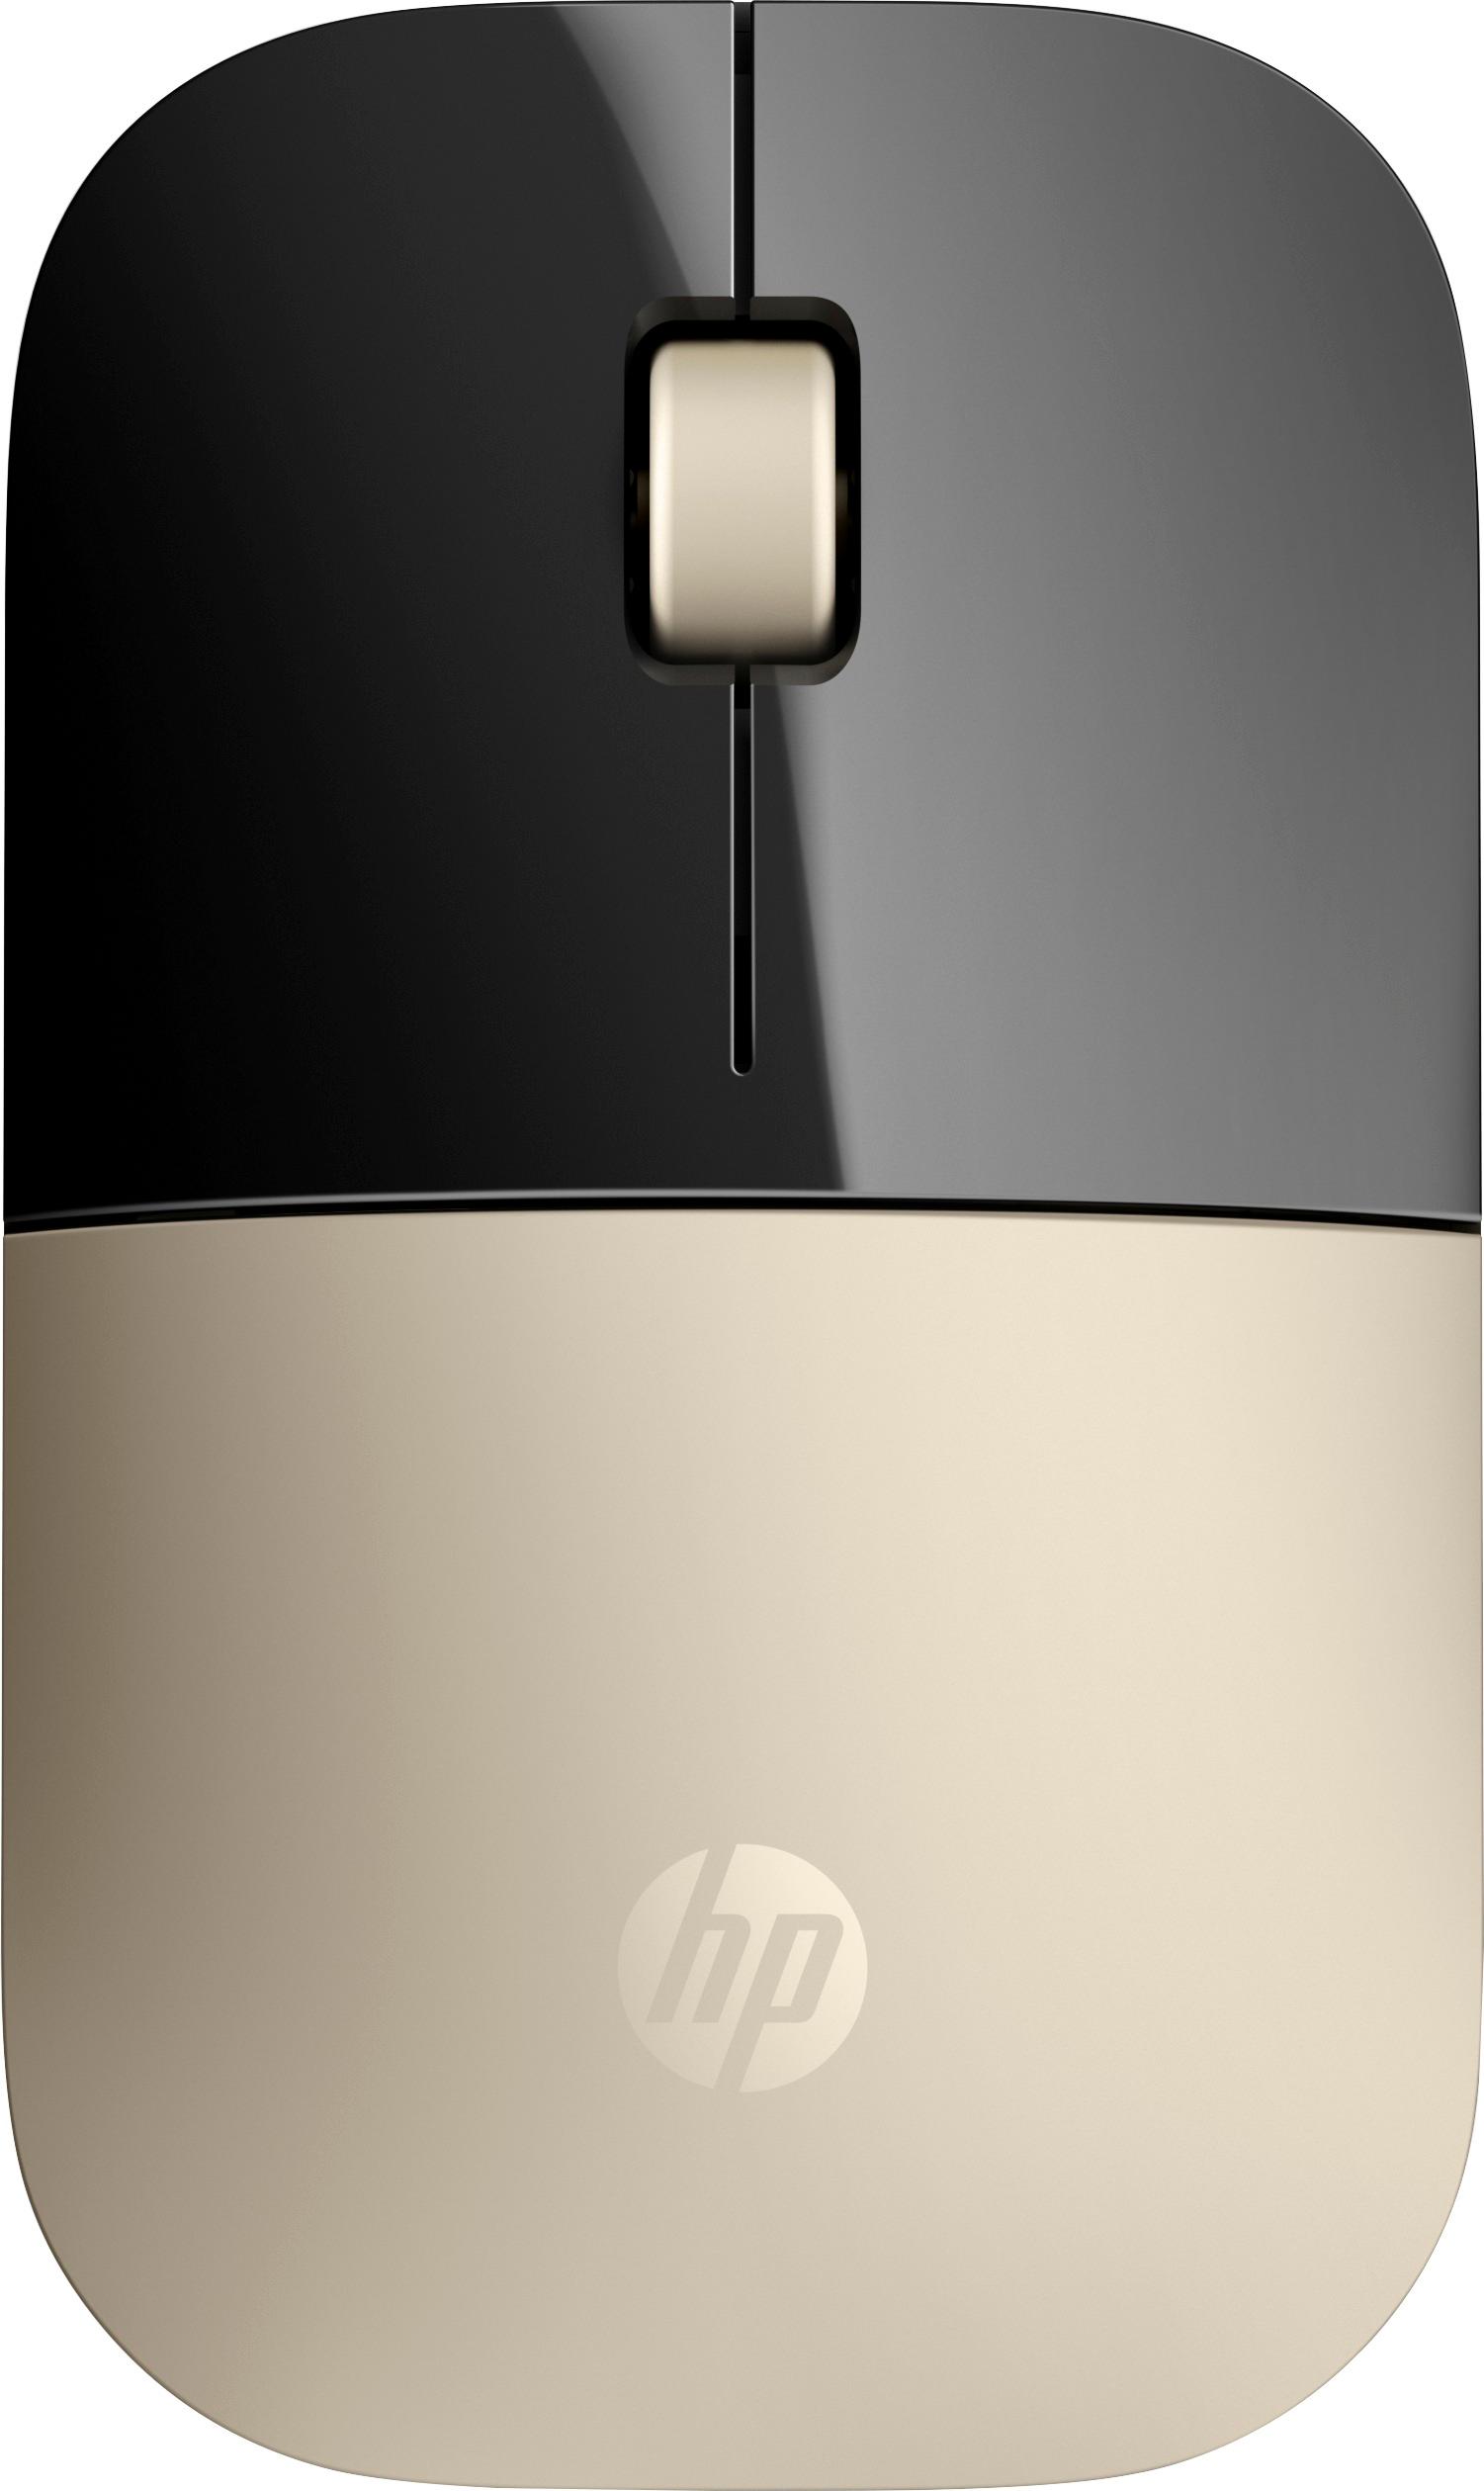 [Zuverlässiger Inlandsversand] HP Z3700 Wireless Blue LED - Best Buy Z3700 X7Q43AA#ABL Mouse Gold